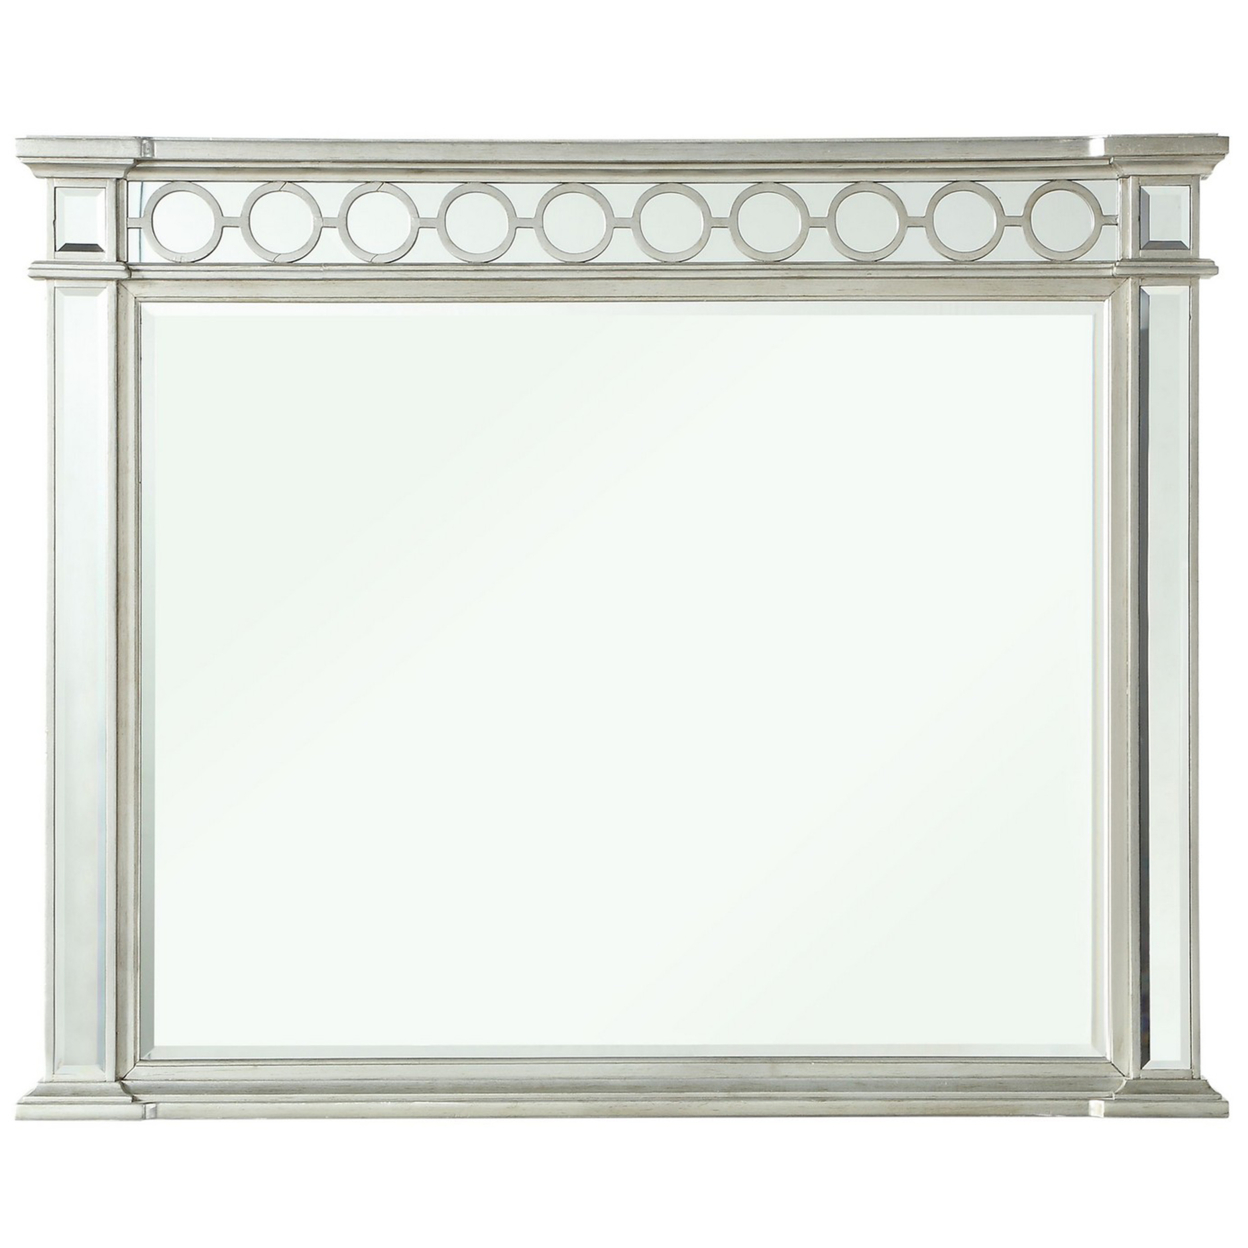 Wooden Raised Geometric Pattern Frame Mirror With Beveled Edges, Silver- Saltoro Sherpi